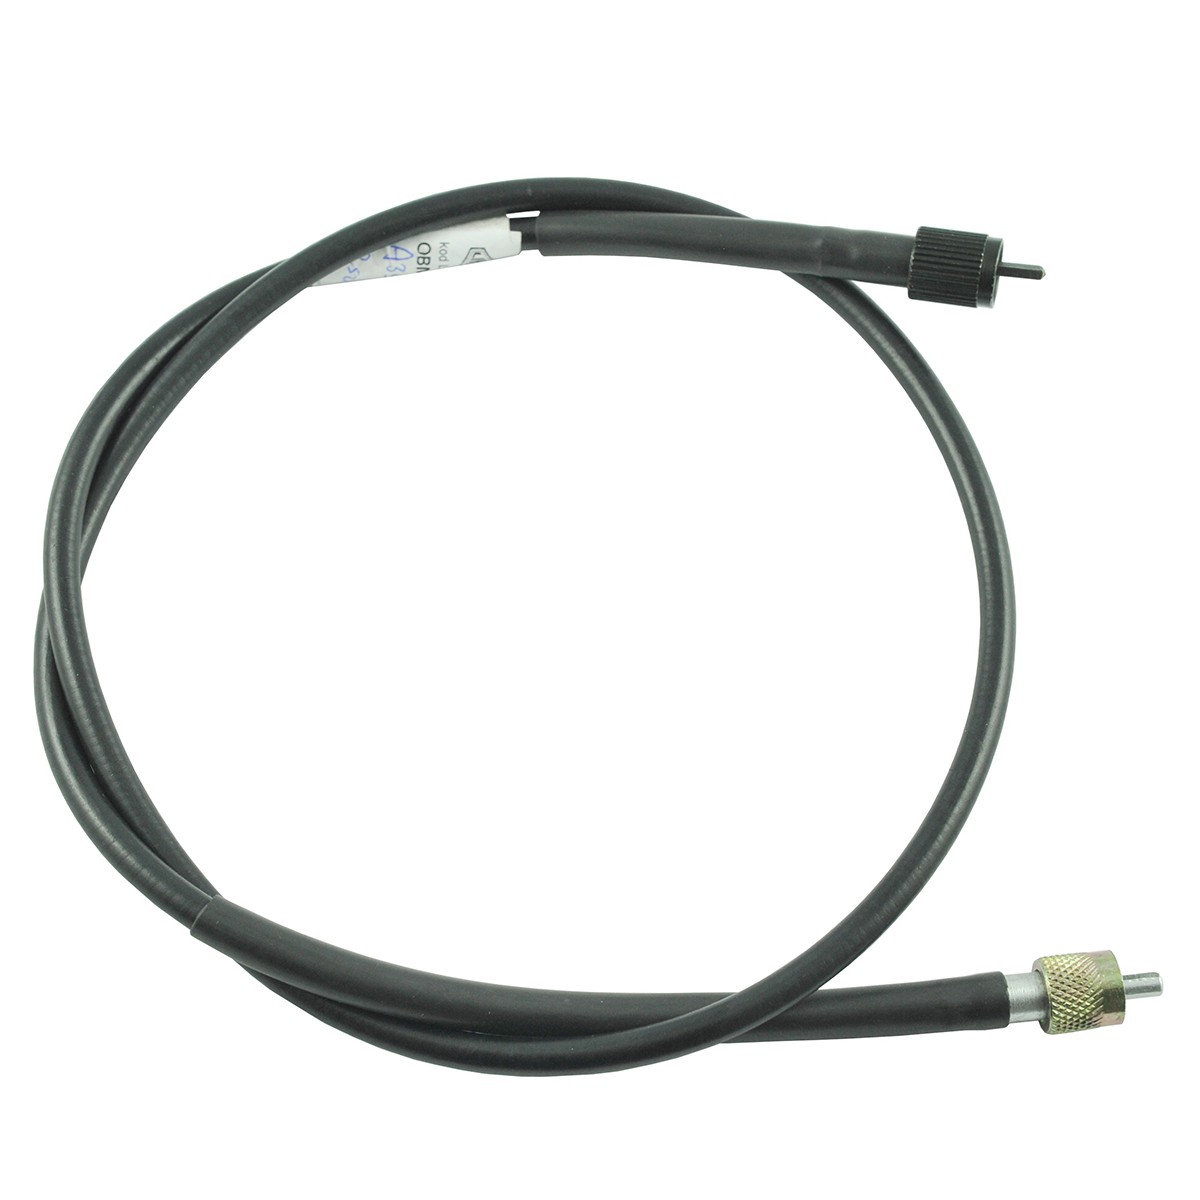 Counter cable / 1110 mm / Kubota B2710/L1802/L2002/L2202/L2402/L2602/L2850/L2900/L3010/L325/L3300/L3410/L3450/L3650 / OBMT13